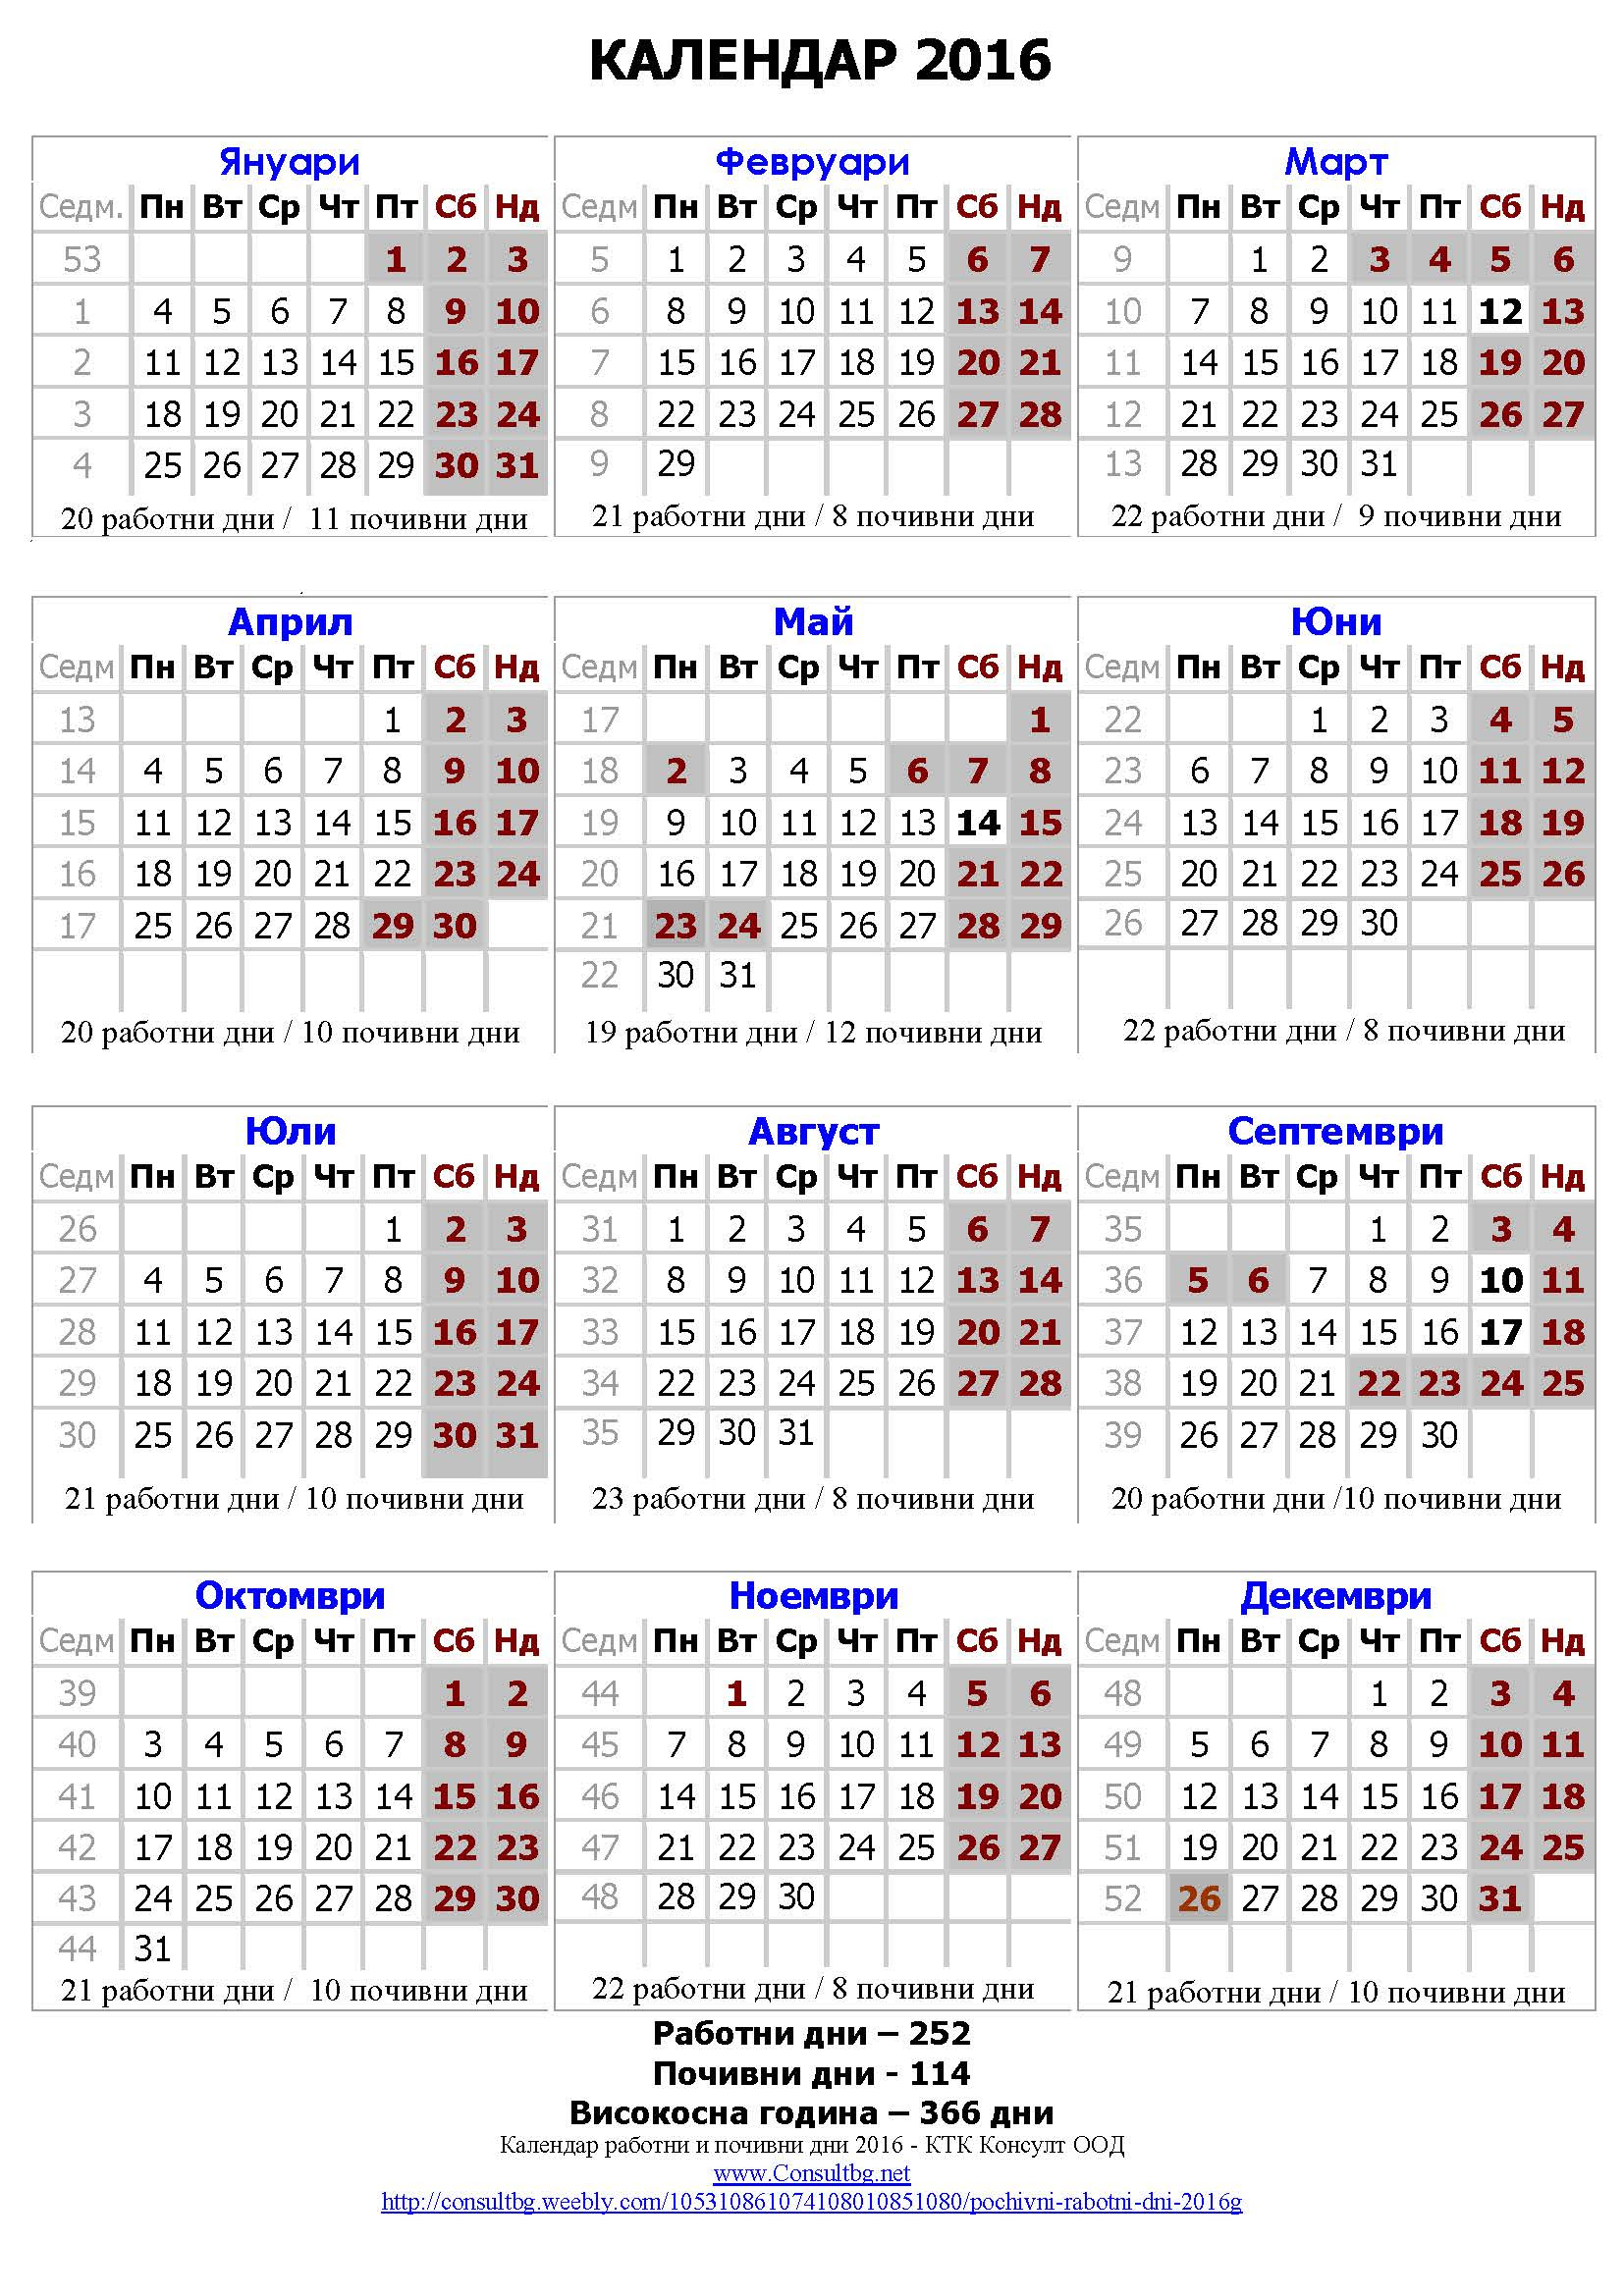 25 Elegant Kalendar 2016